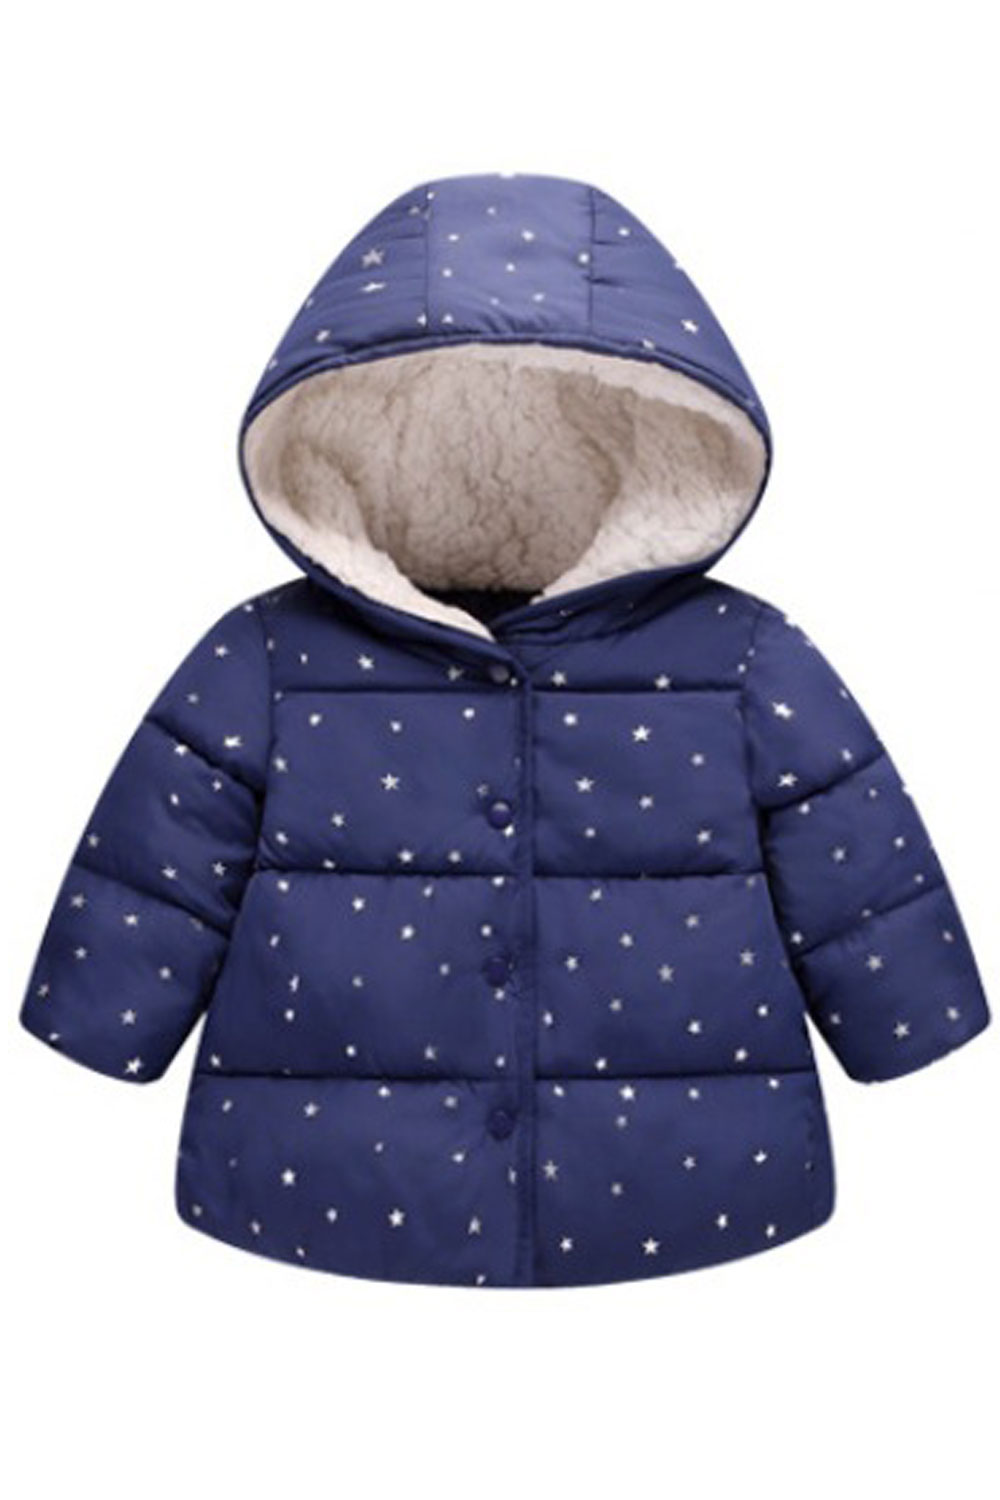 zara baby girl winter jacket